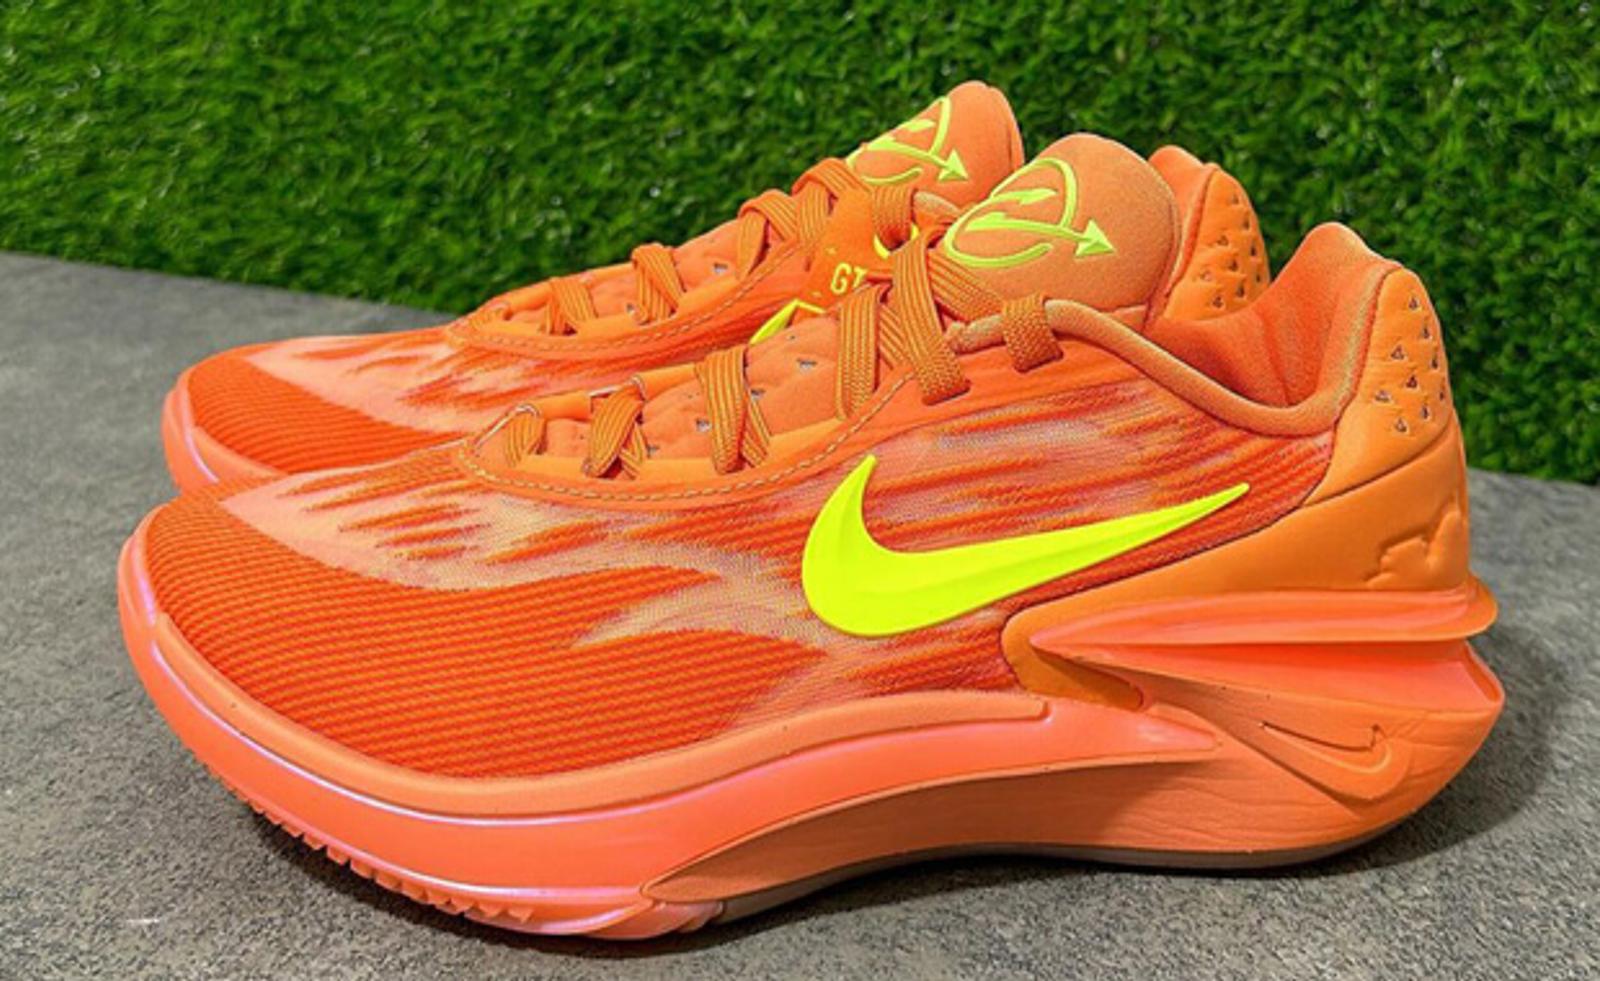 Arike Ogunbowale's Nike Air Zoom GT Cut 2 Features Vibrant Orange Shades